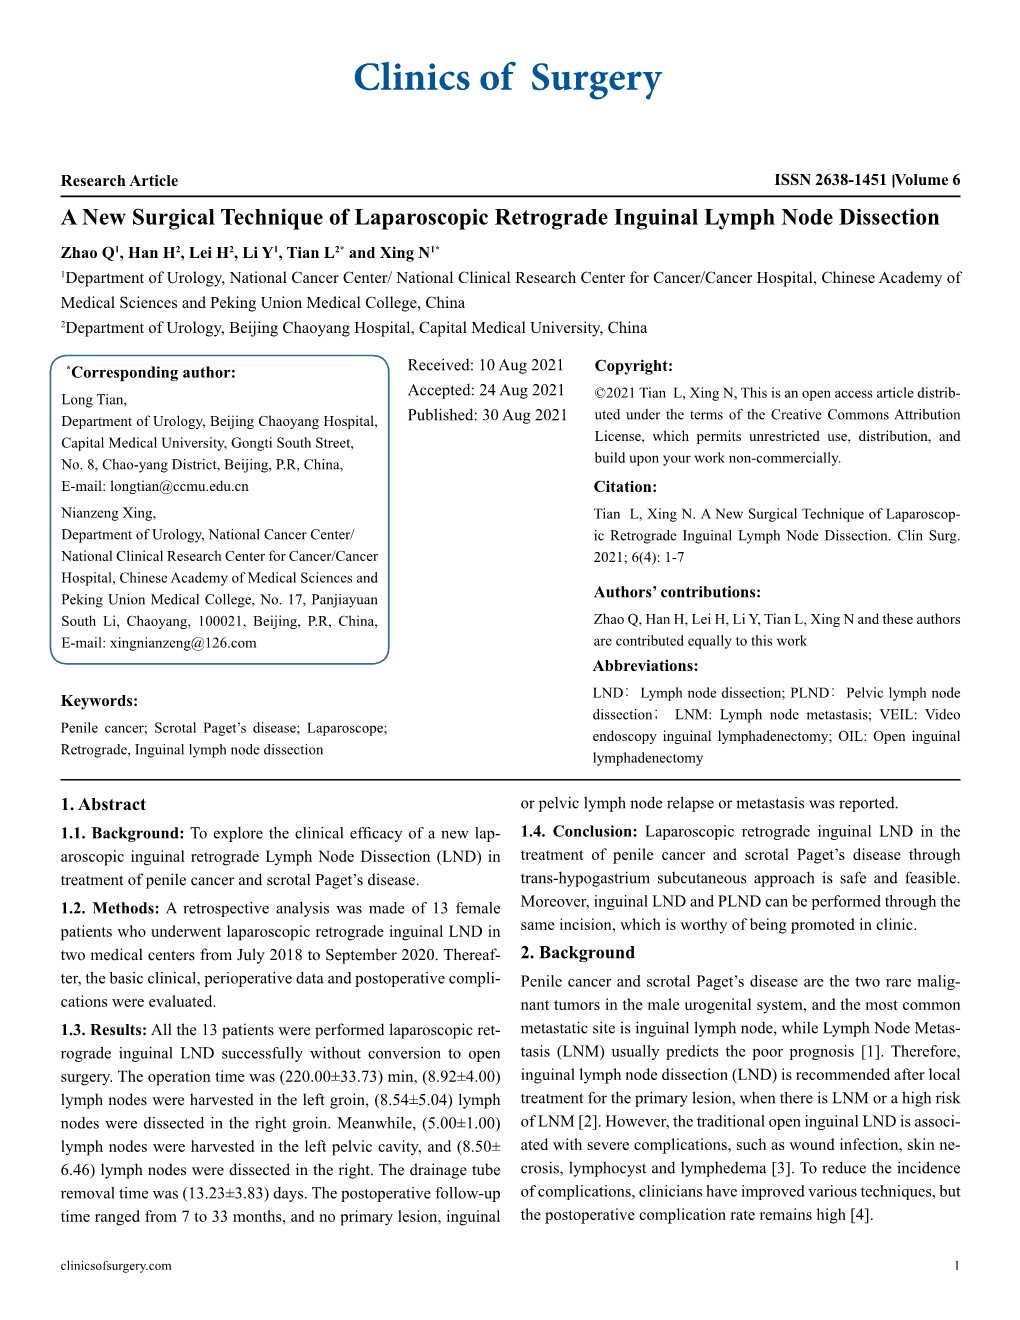 A New Surgical Technique of Laparoscopic Retrograde Inguinal